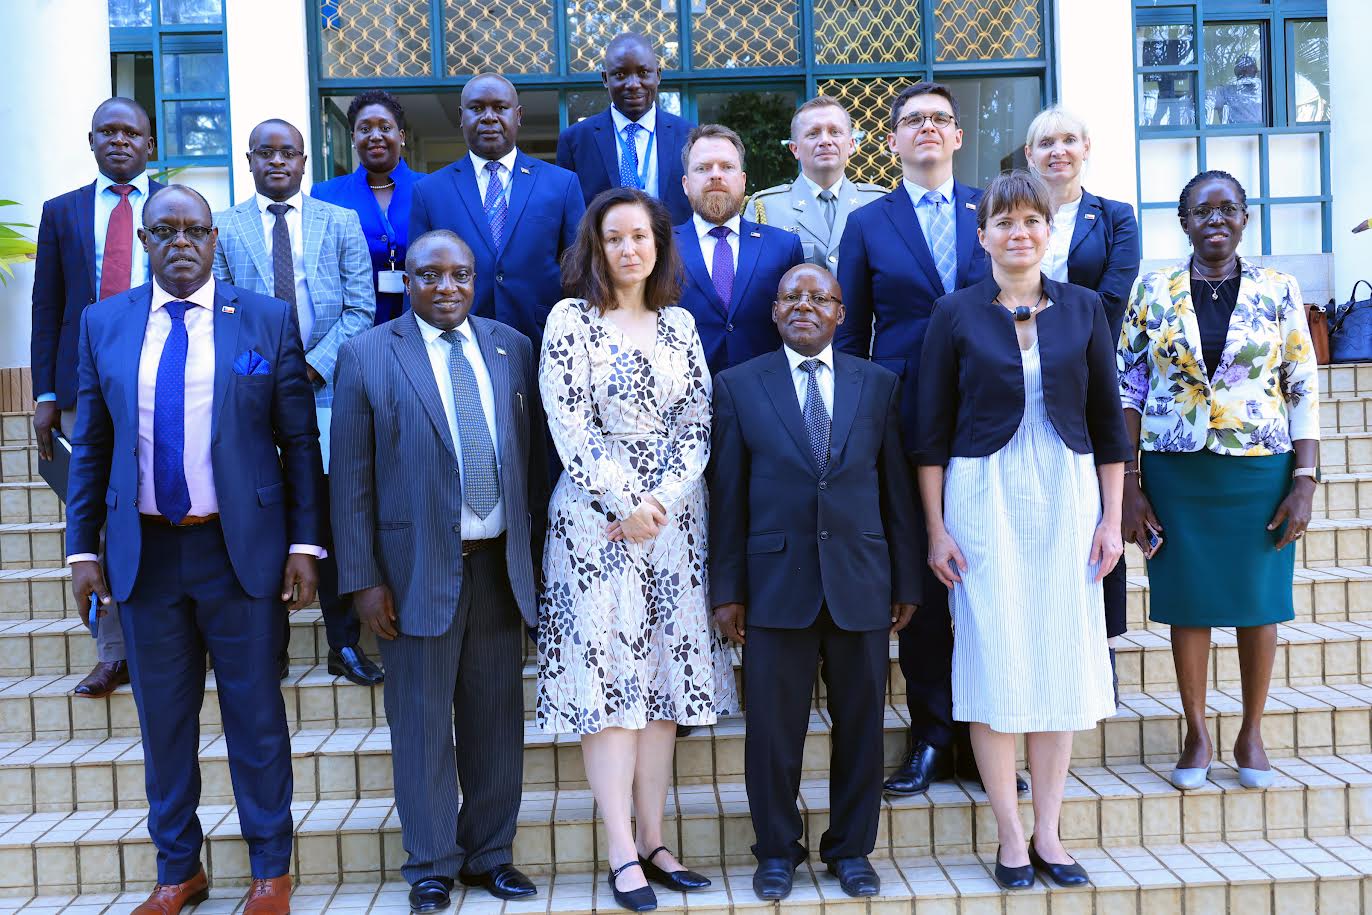 Czech Republic delegation in Uganda to strengthen ties